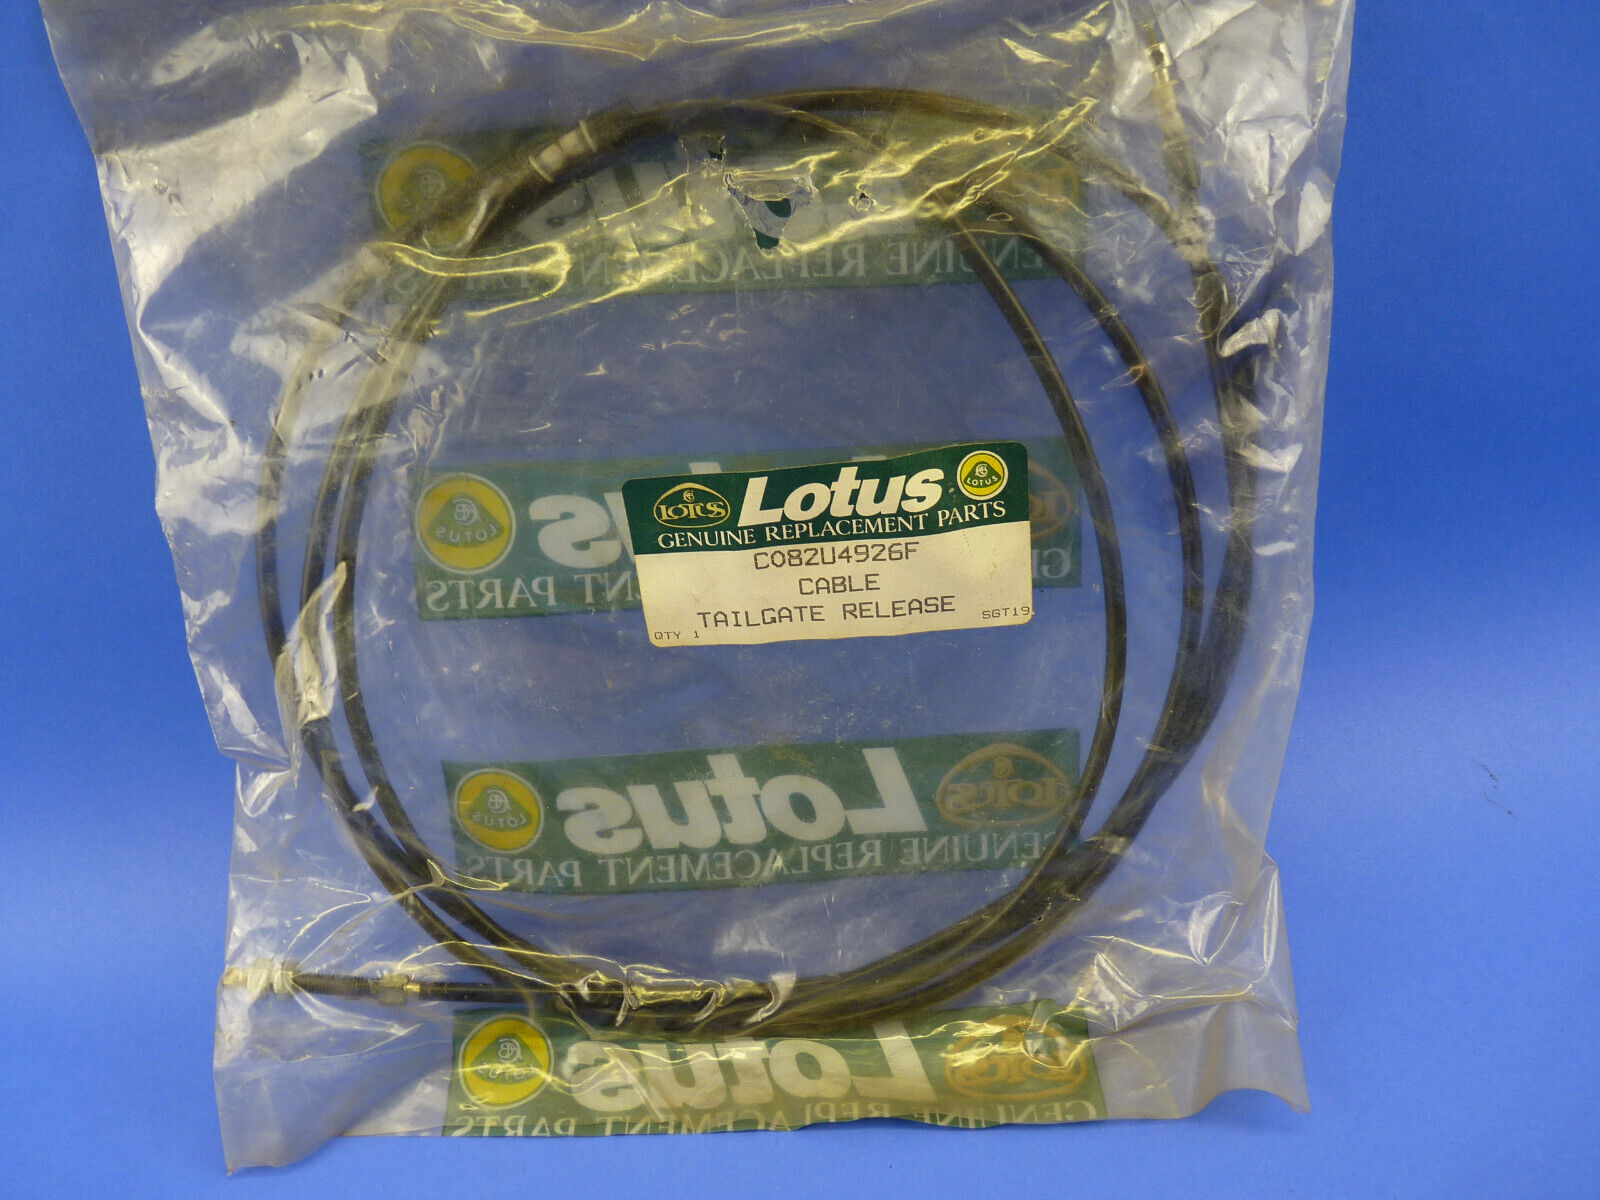 Lotus Esprit NOS cable tailgate release C082U4926F D082U4926F